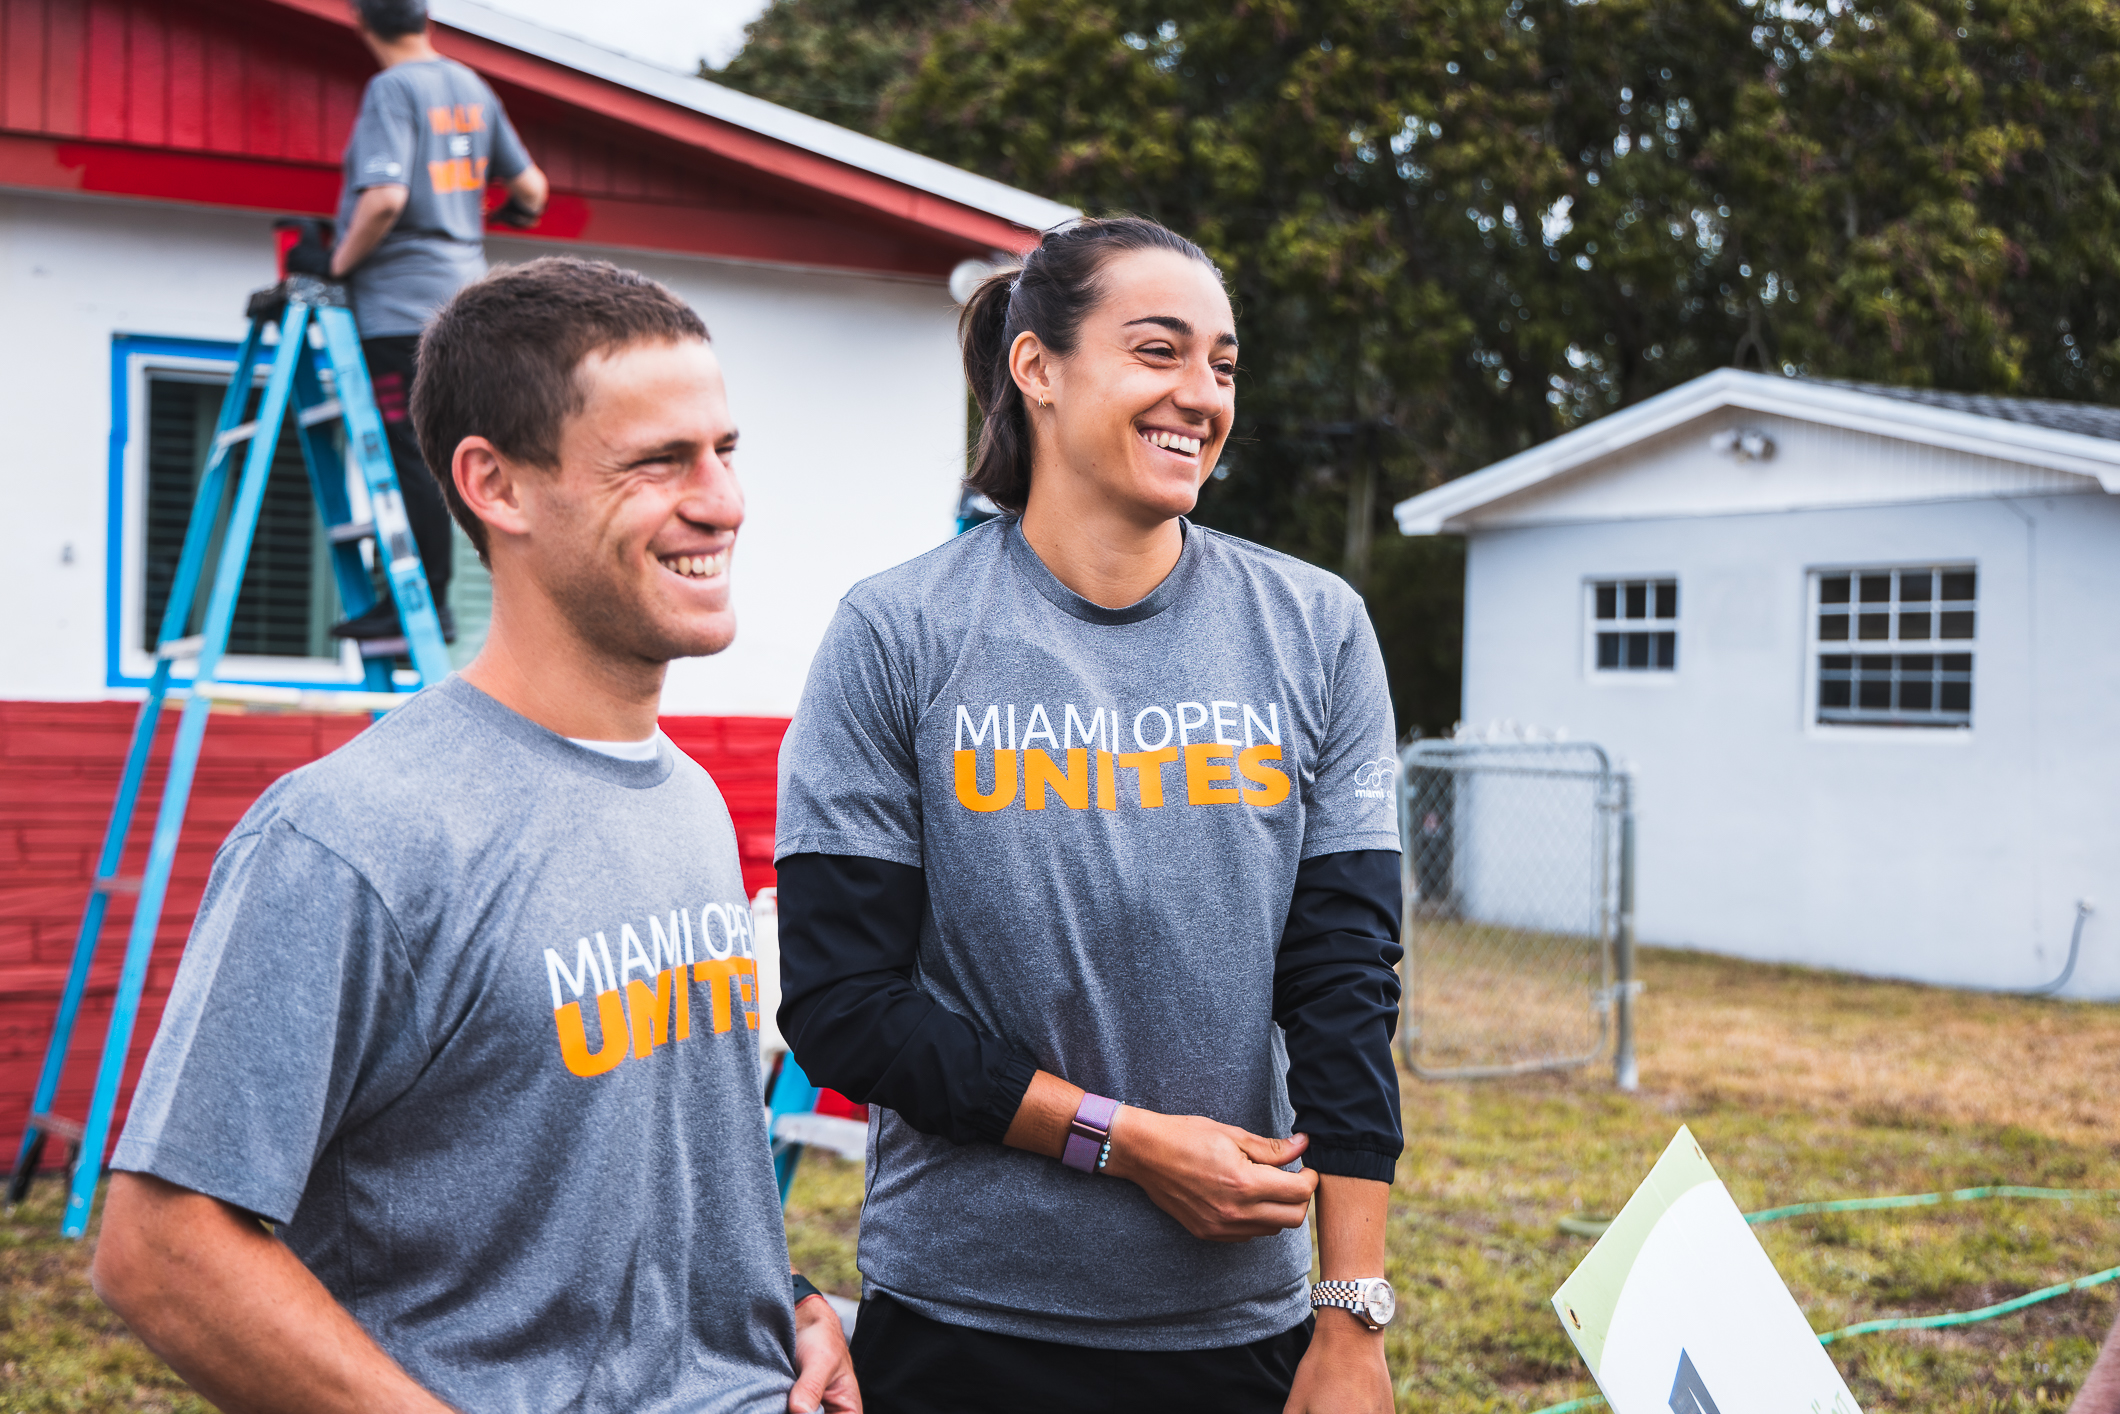 Diego Schwartzman and Caroline Garcia smile at the Miami Open Unites Rebuilding Together event in Miami on March 20, 2023.